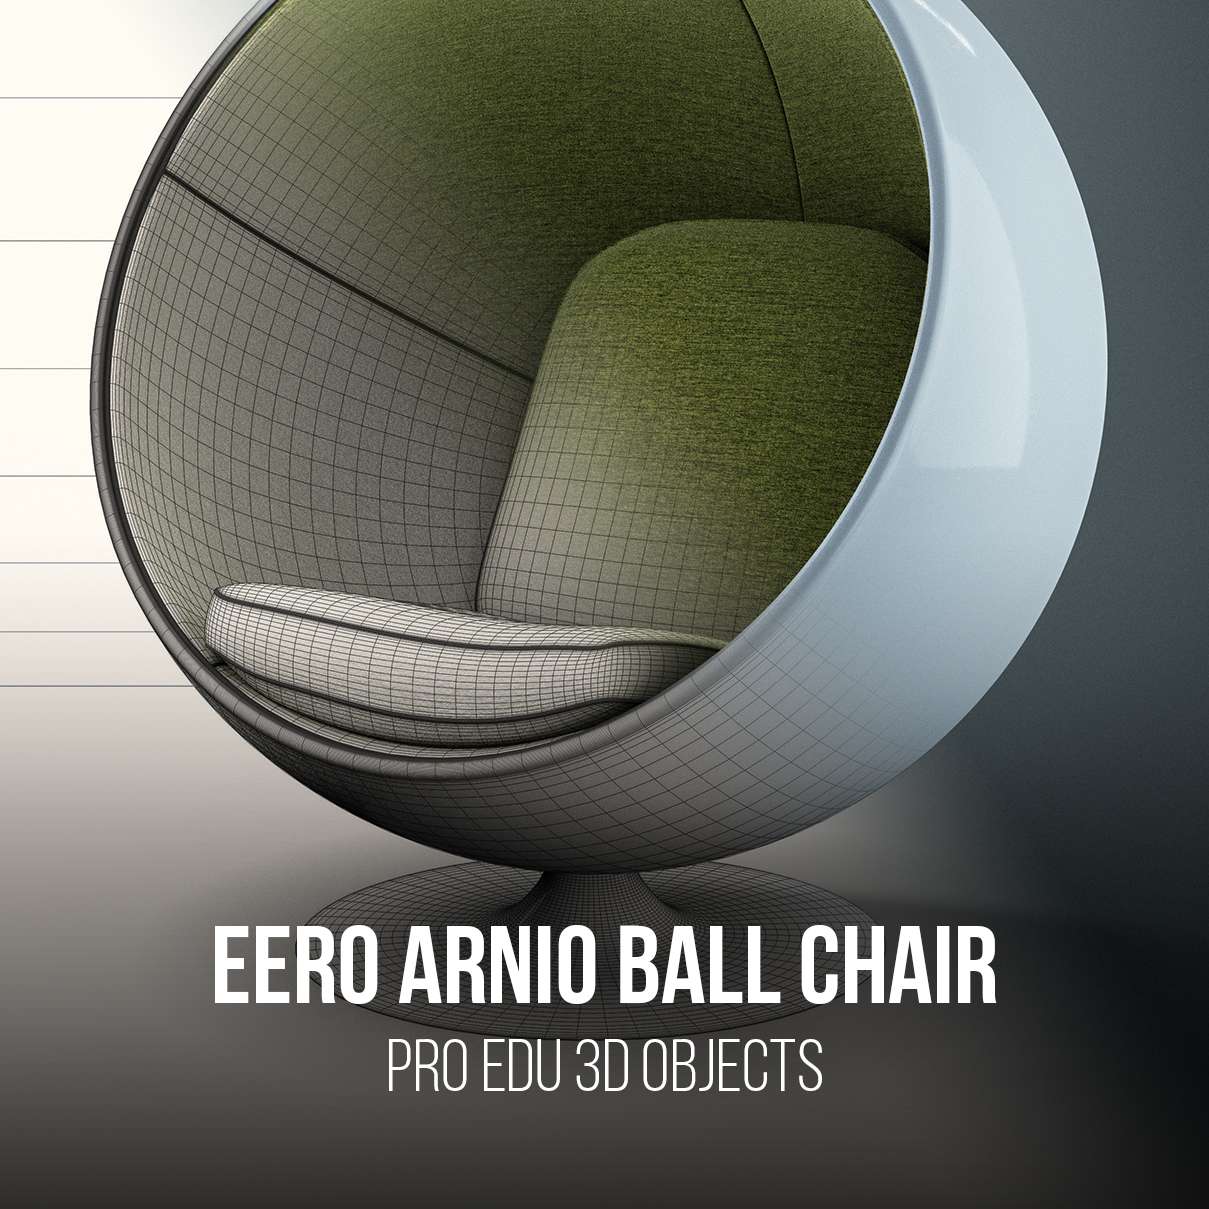 Eero Aarnio Ball Chair 3D Model Photoshop | C4D FBX OBJ CGI Asset  PRO EDU PRO EDU